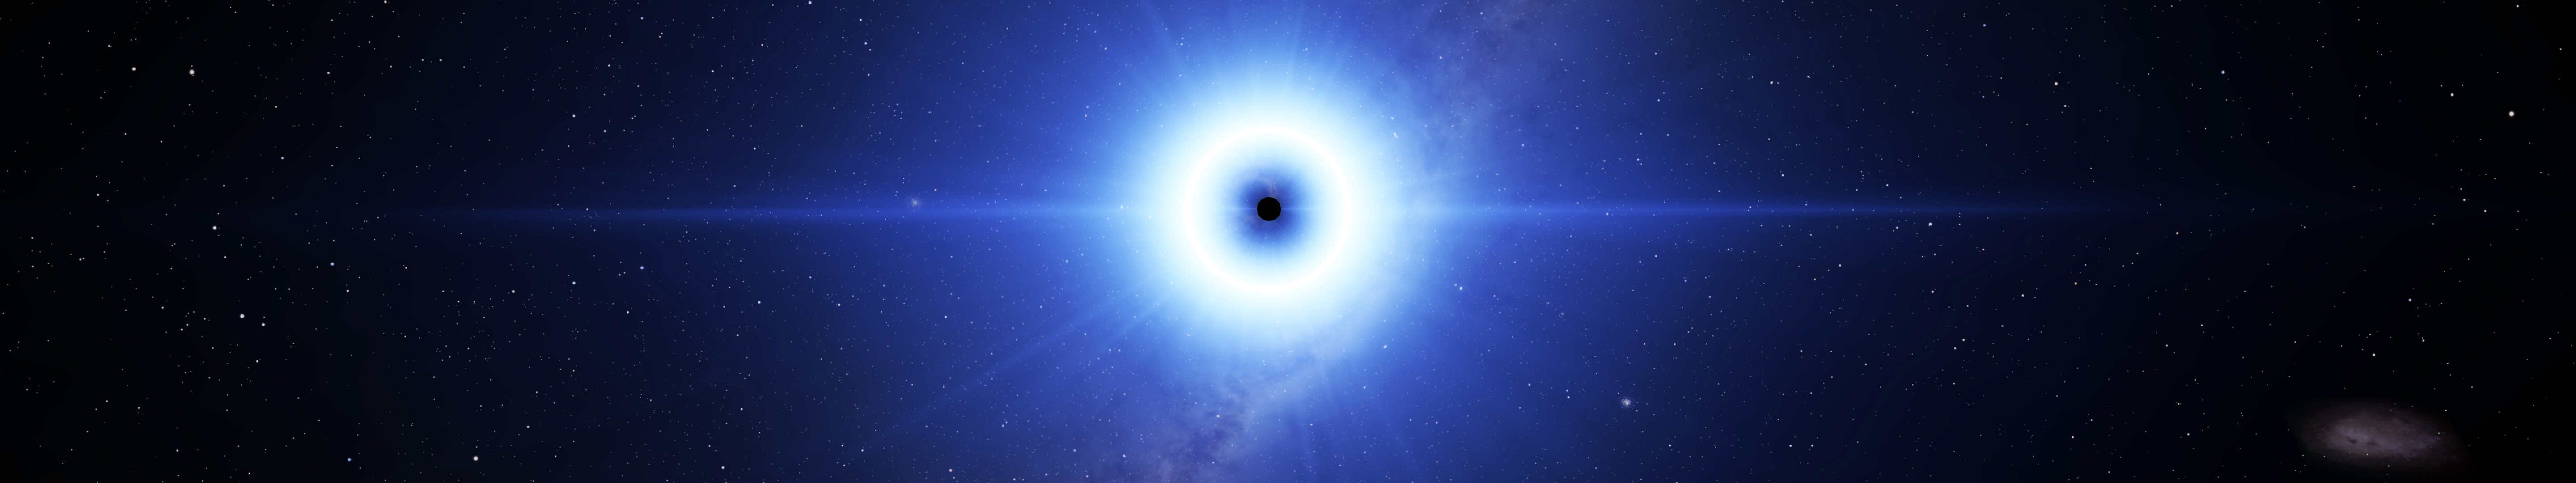 Space Engine Stars Black Holes Gravitational Lens Space Art Digital Art CGi 3D Render 5760x1080